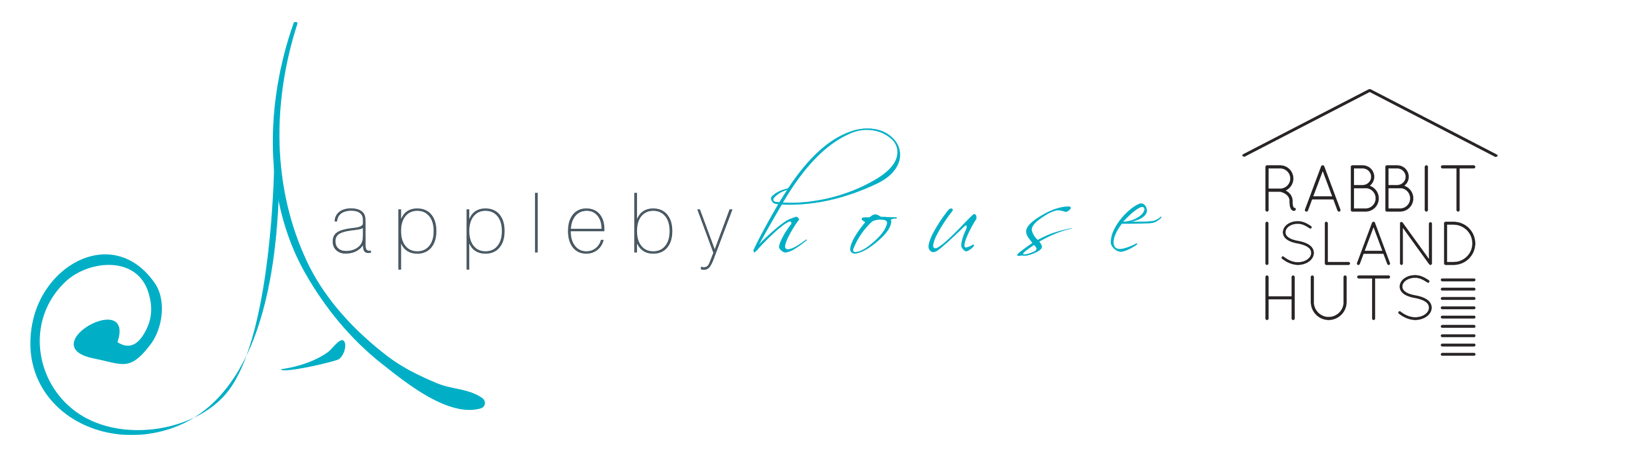 appleby-logo.png